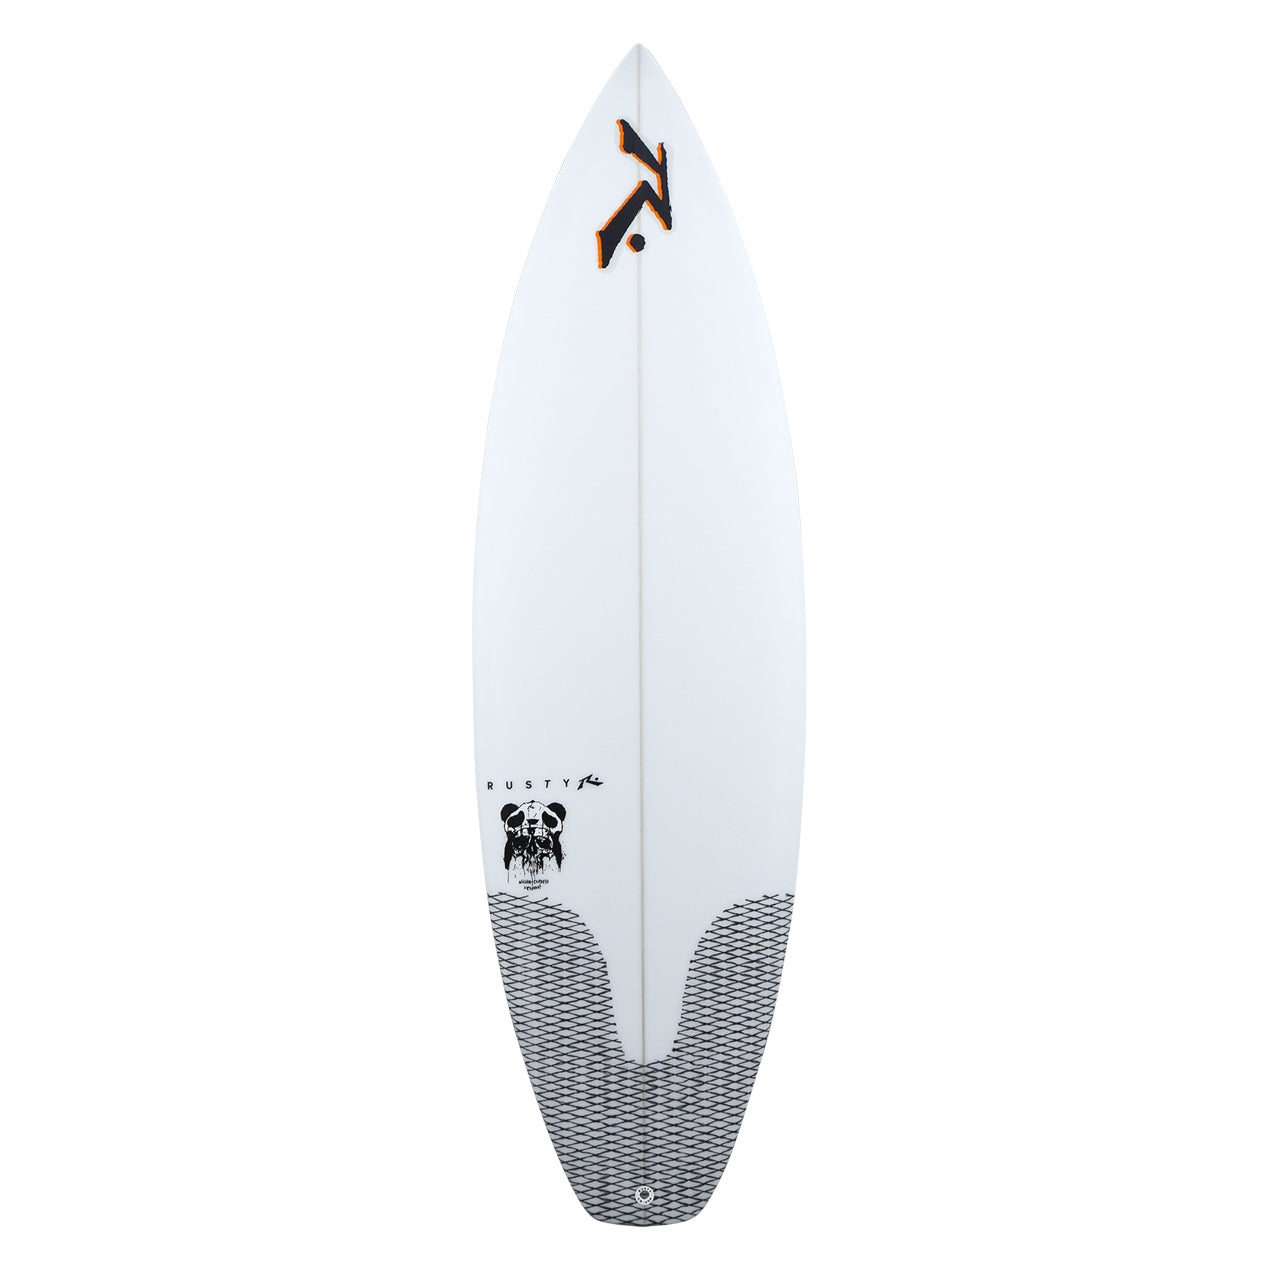 Panda - High Performance Shortboard - Rusty Surfboards - Top View